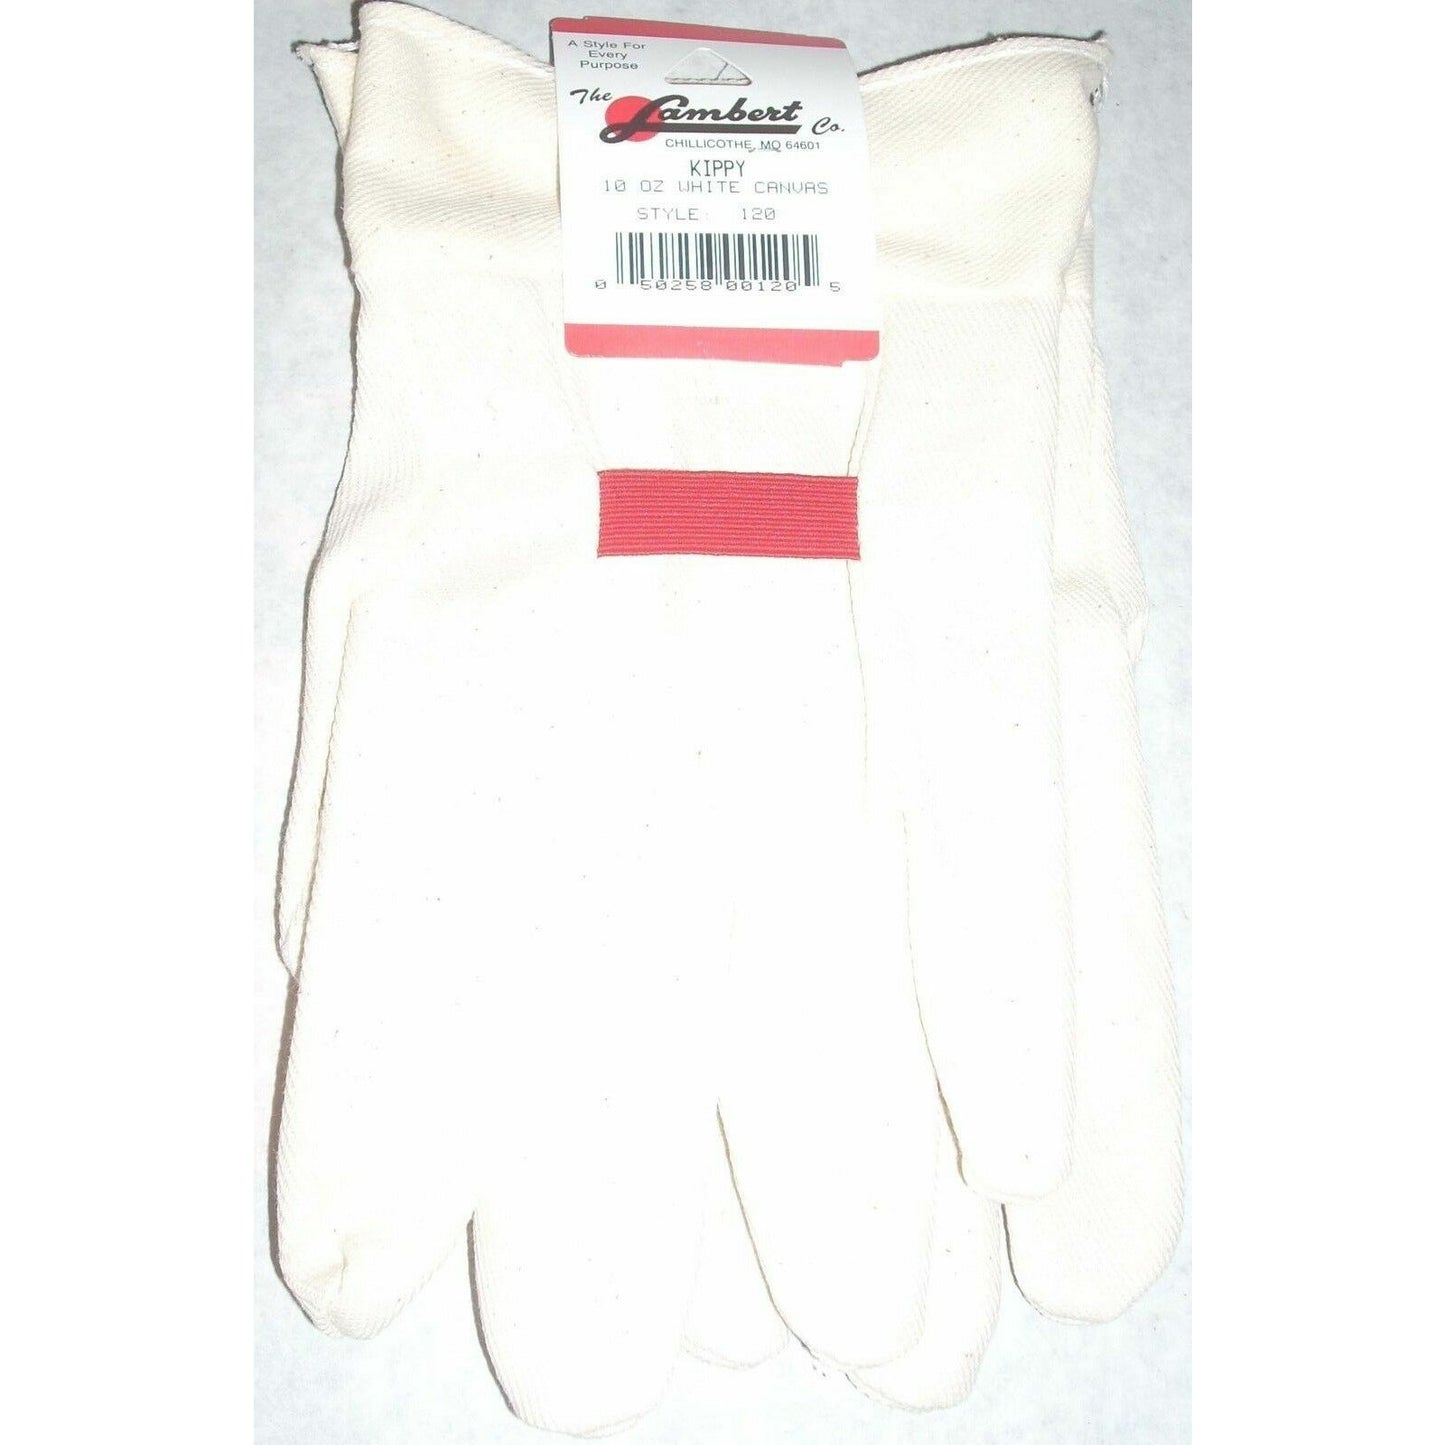 Lambert 120 "Kippy" 10 oz White Canvas Work Gloves One Size